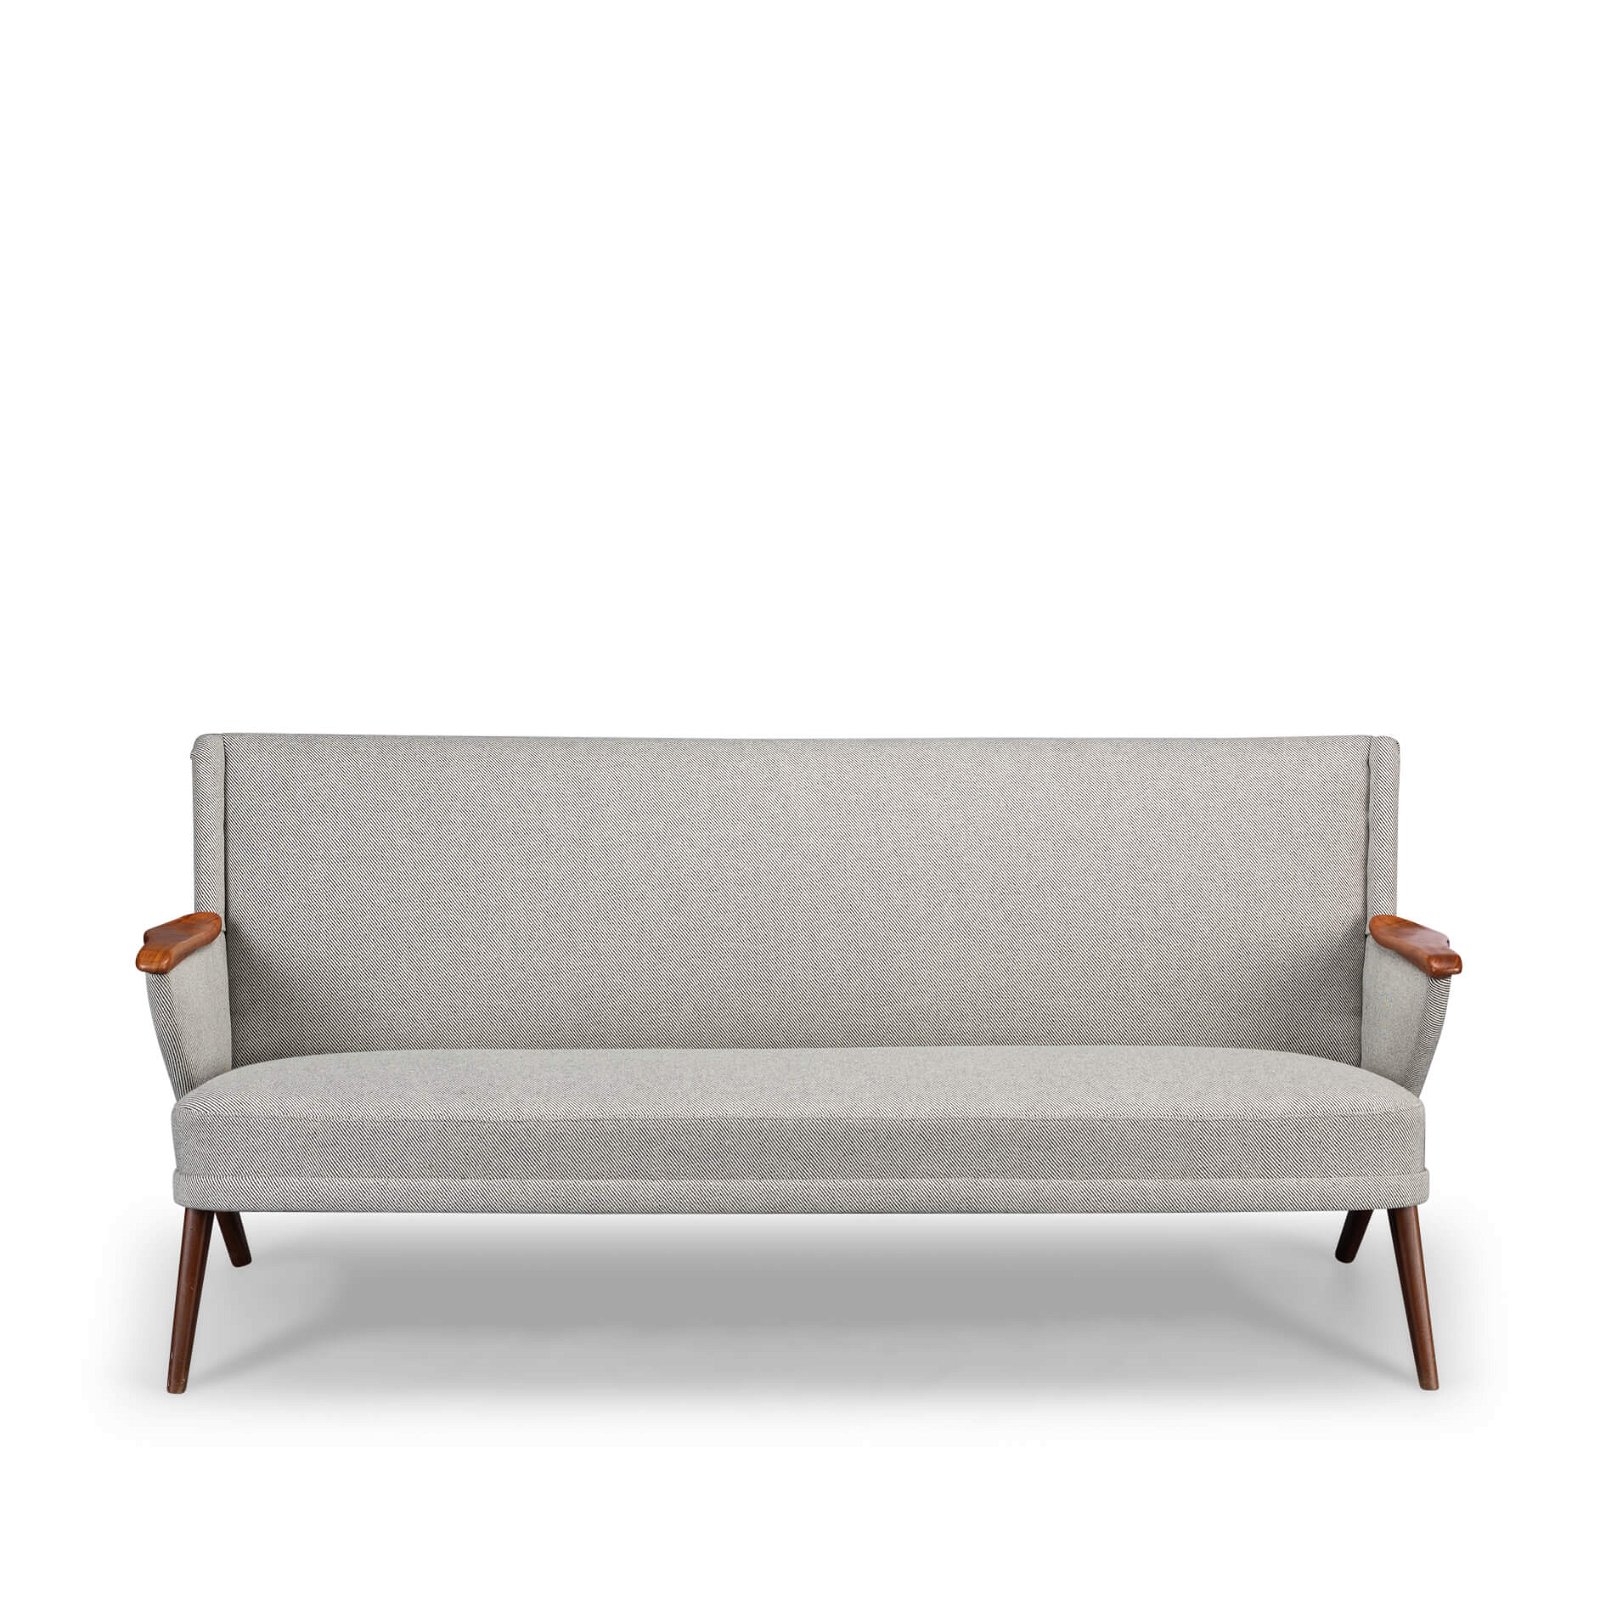 Whoppah Edgy Deense design sofa Wood/Textile - Tweedehands